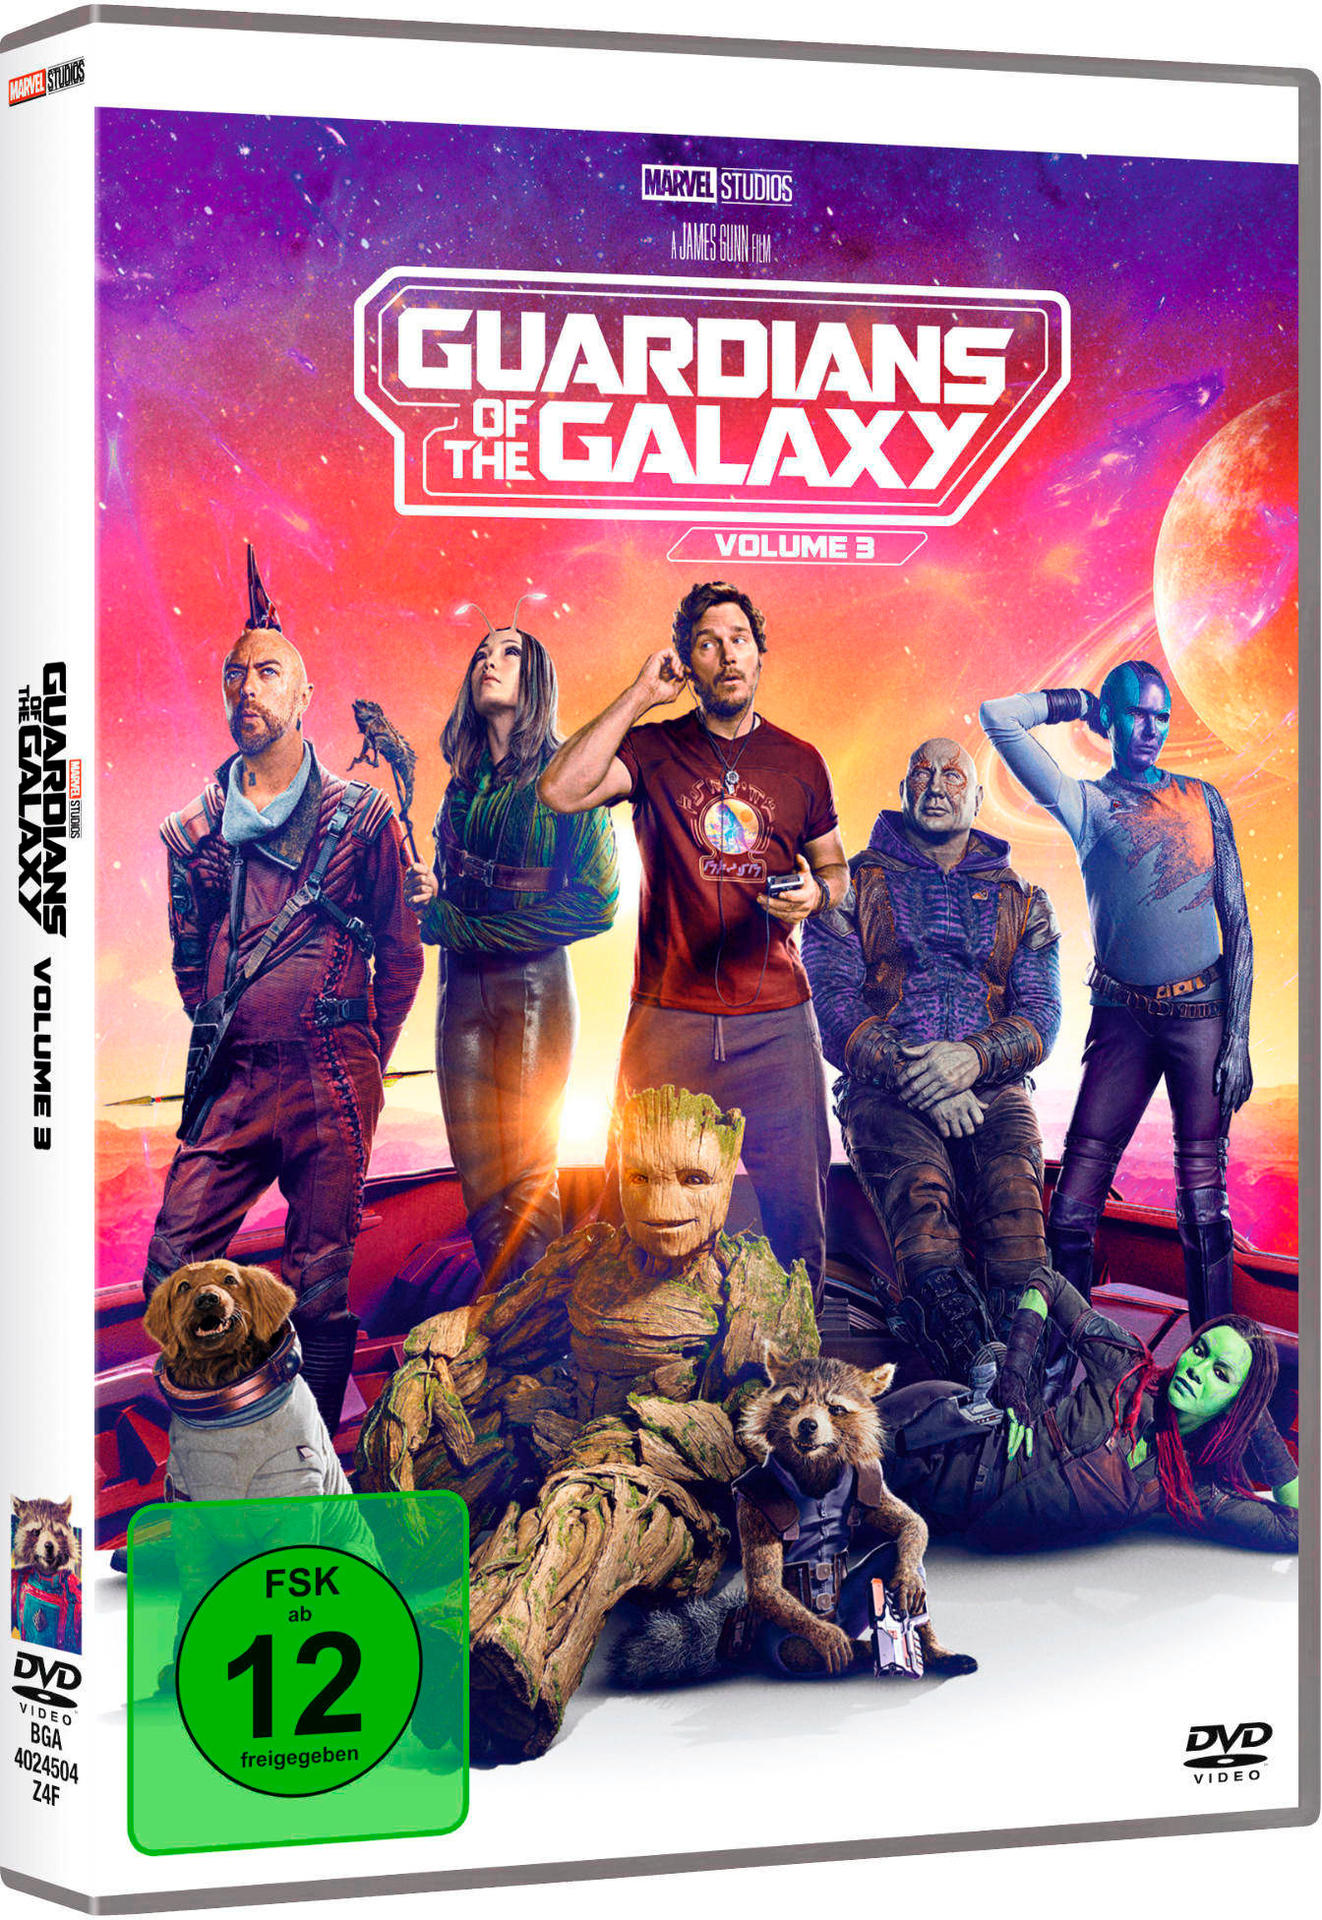 Guardians DVD 3 the Vol. of Galaxy